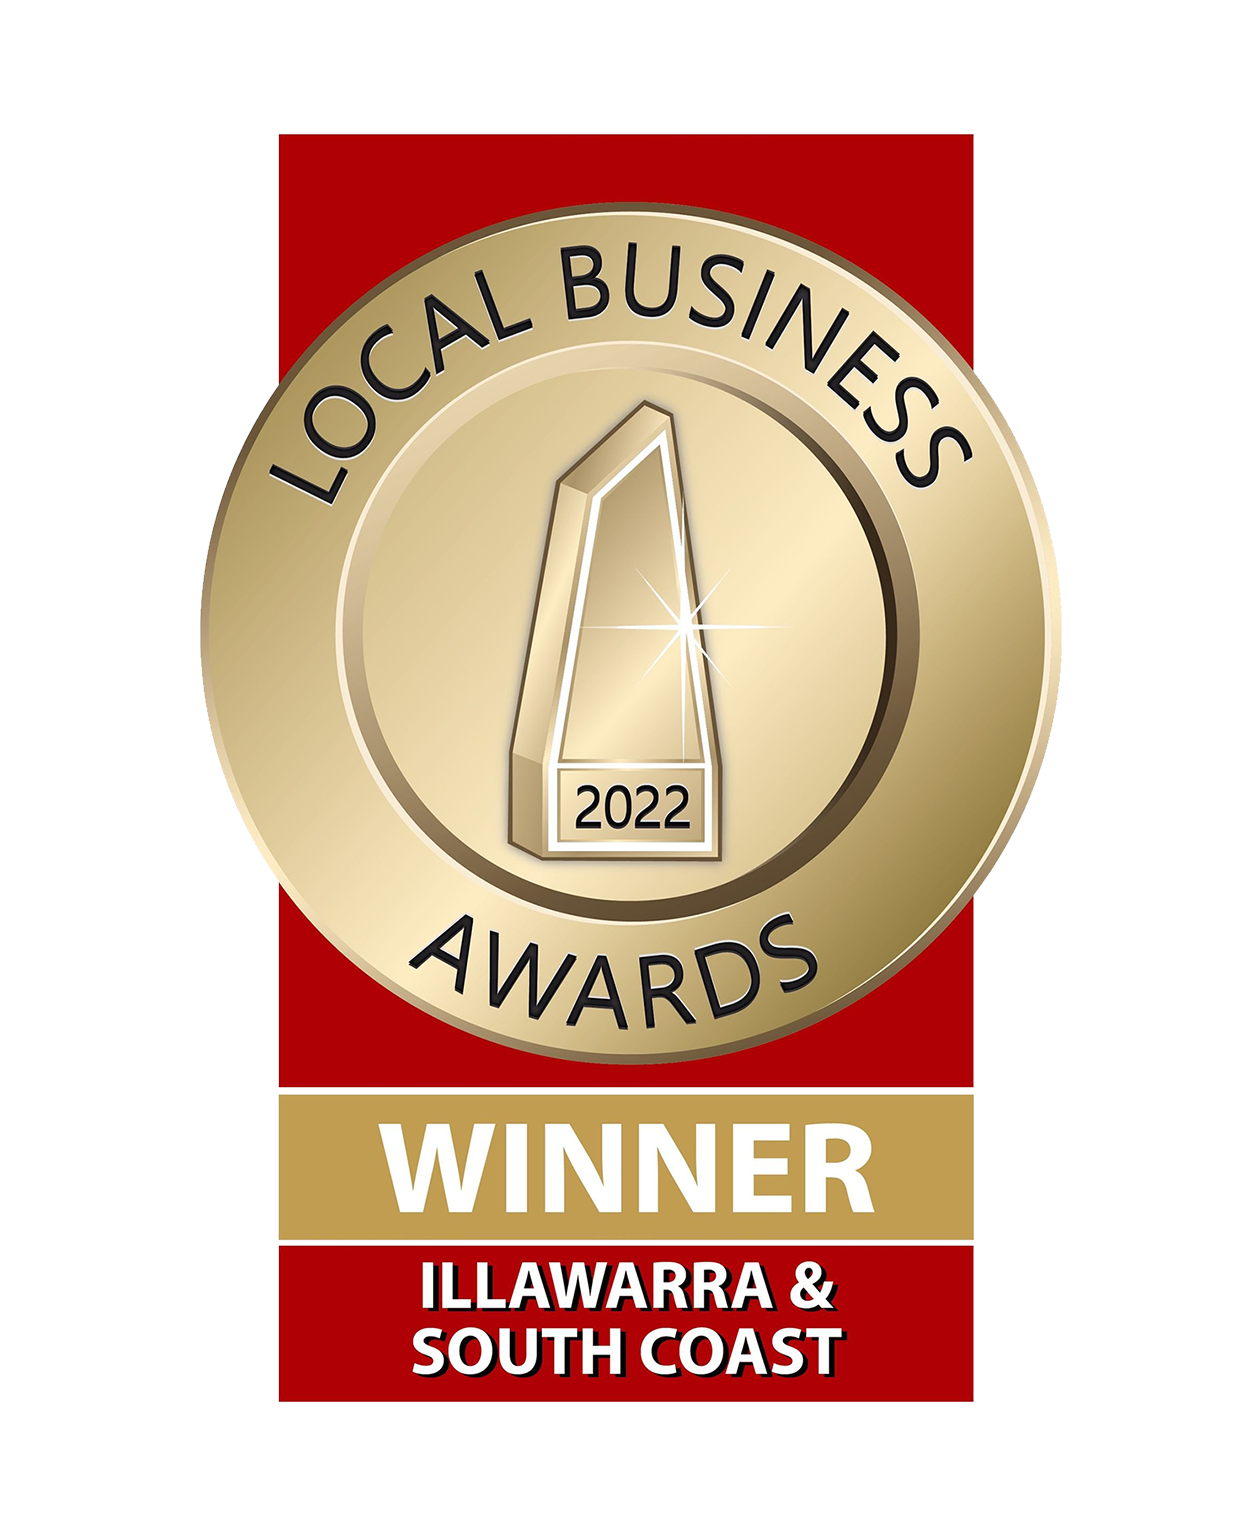 Local Business Awards Illawarra & South Coast Winner 2022